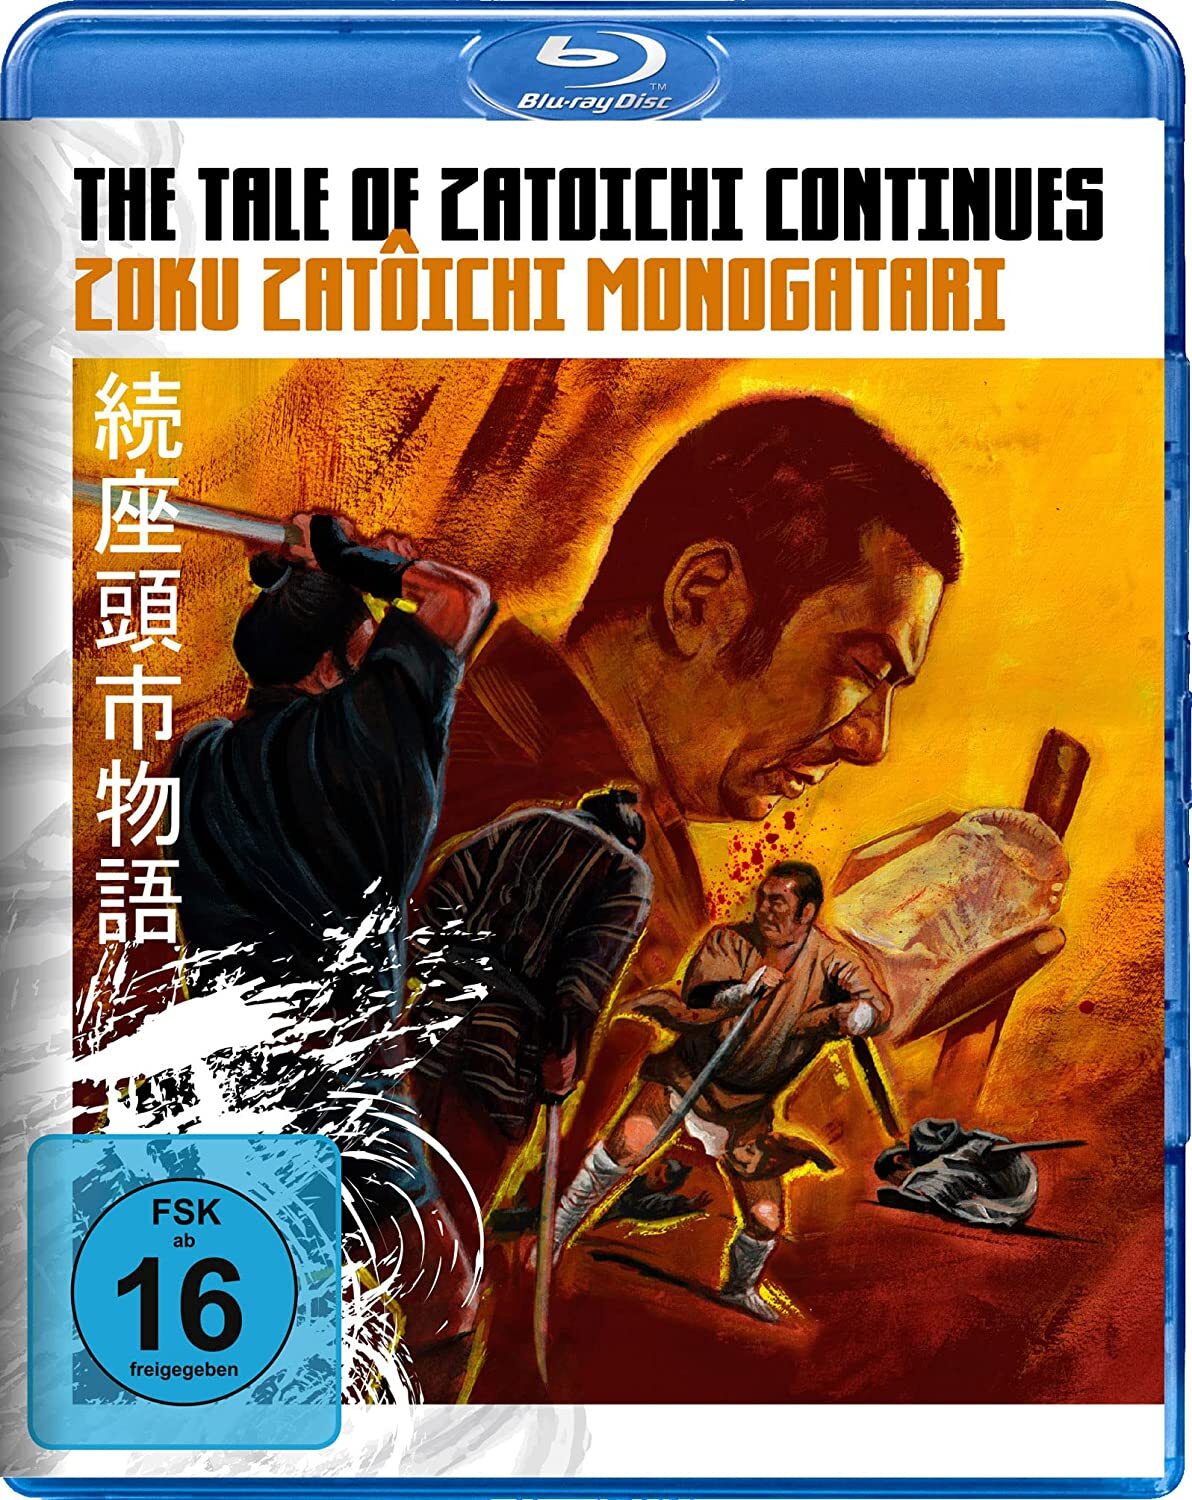 The Tale of Zatoichi Continues Blu-ray (続・座頭市物語 / Zoku